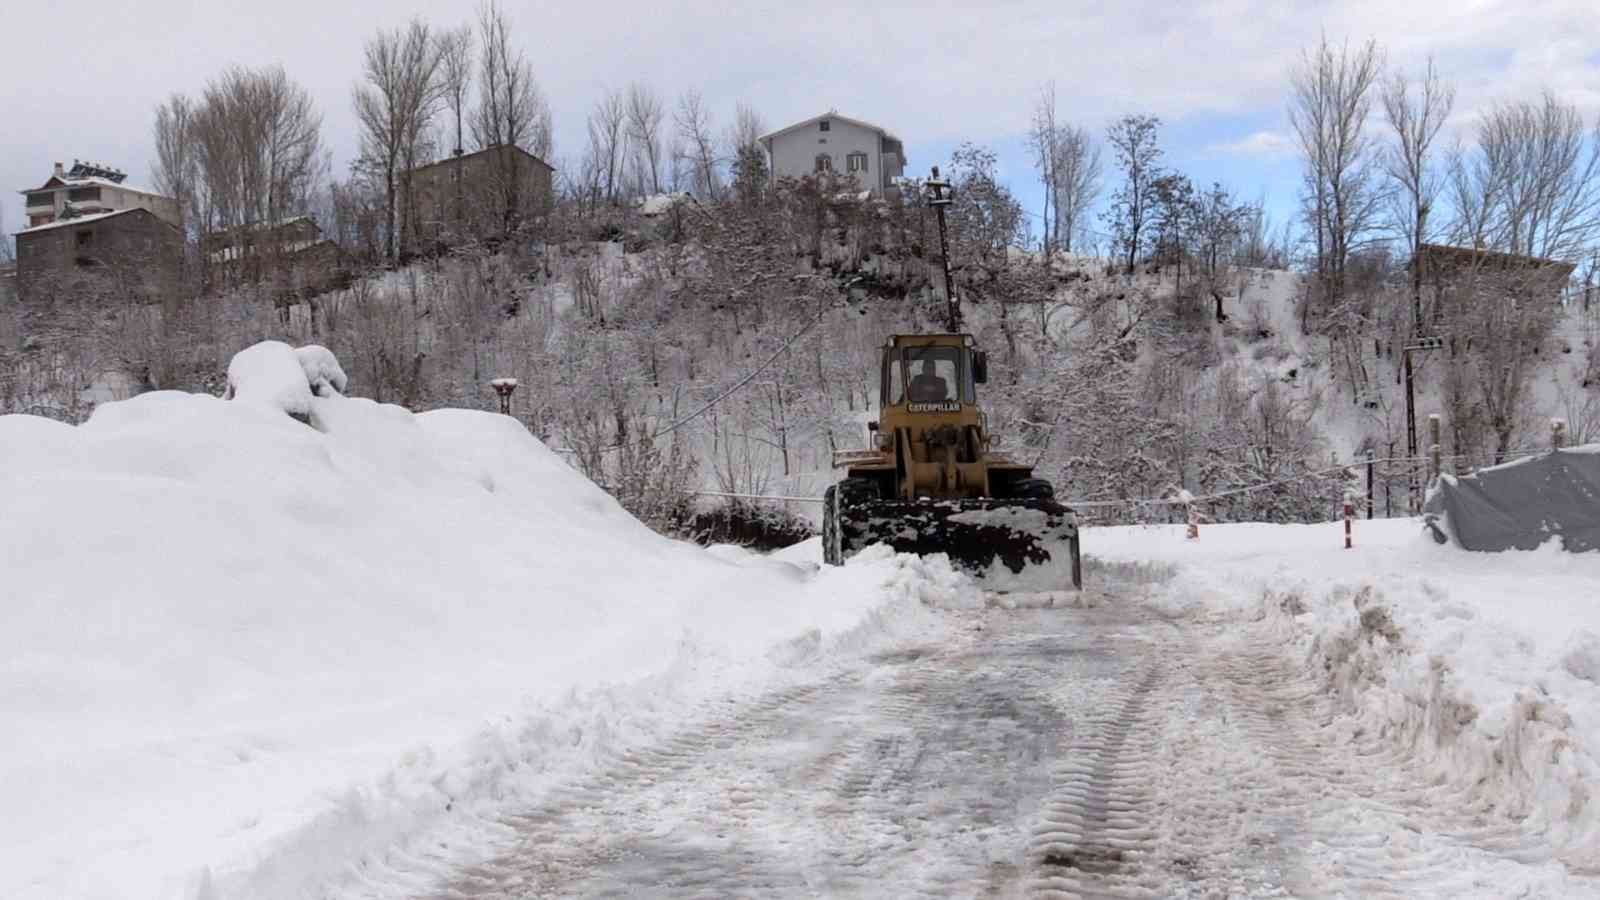 Muş’ta kar yağışı nedeniyle 109 köy yolu ulaşıma kapandı #mus